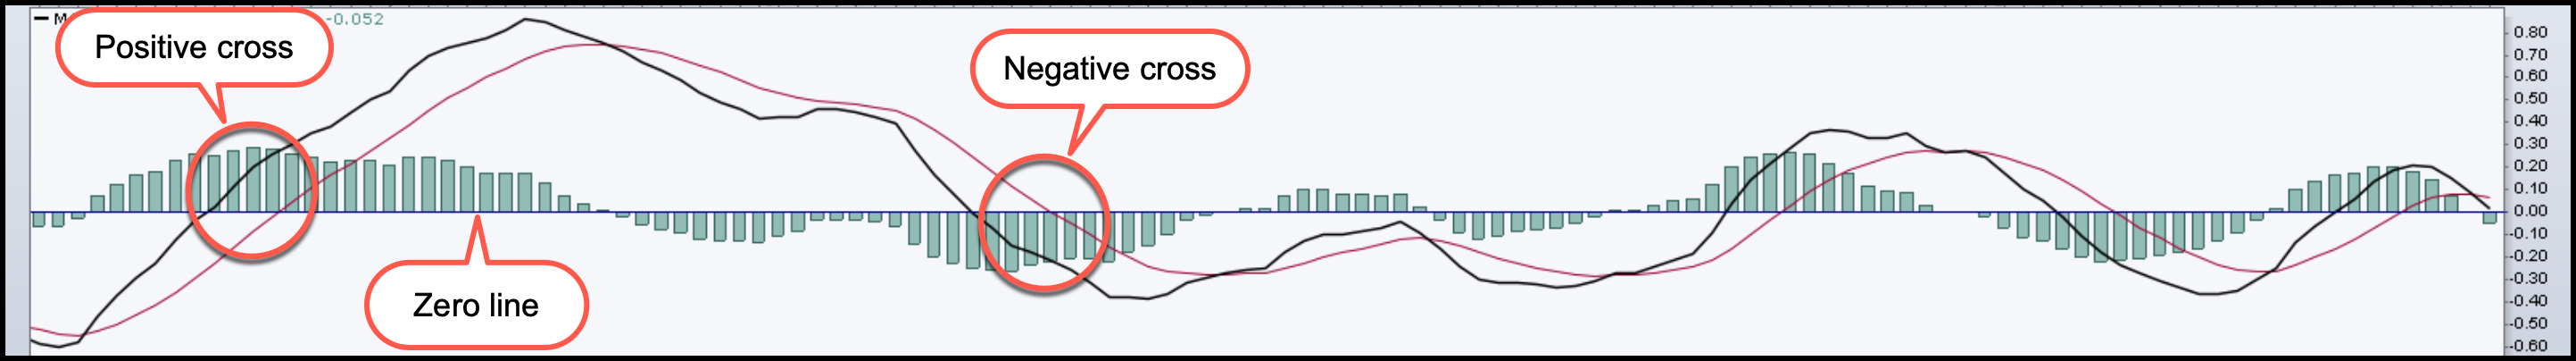 MACD zero line cross in StockCharts.com